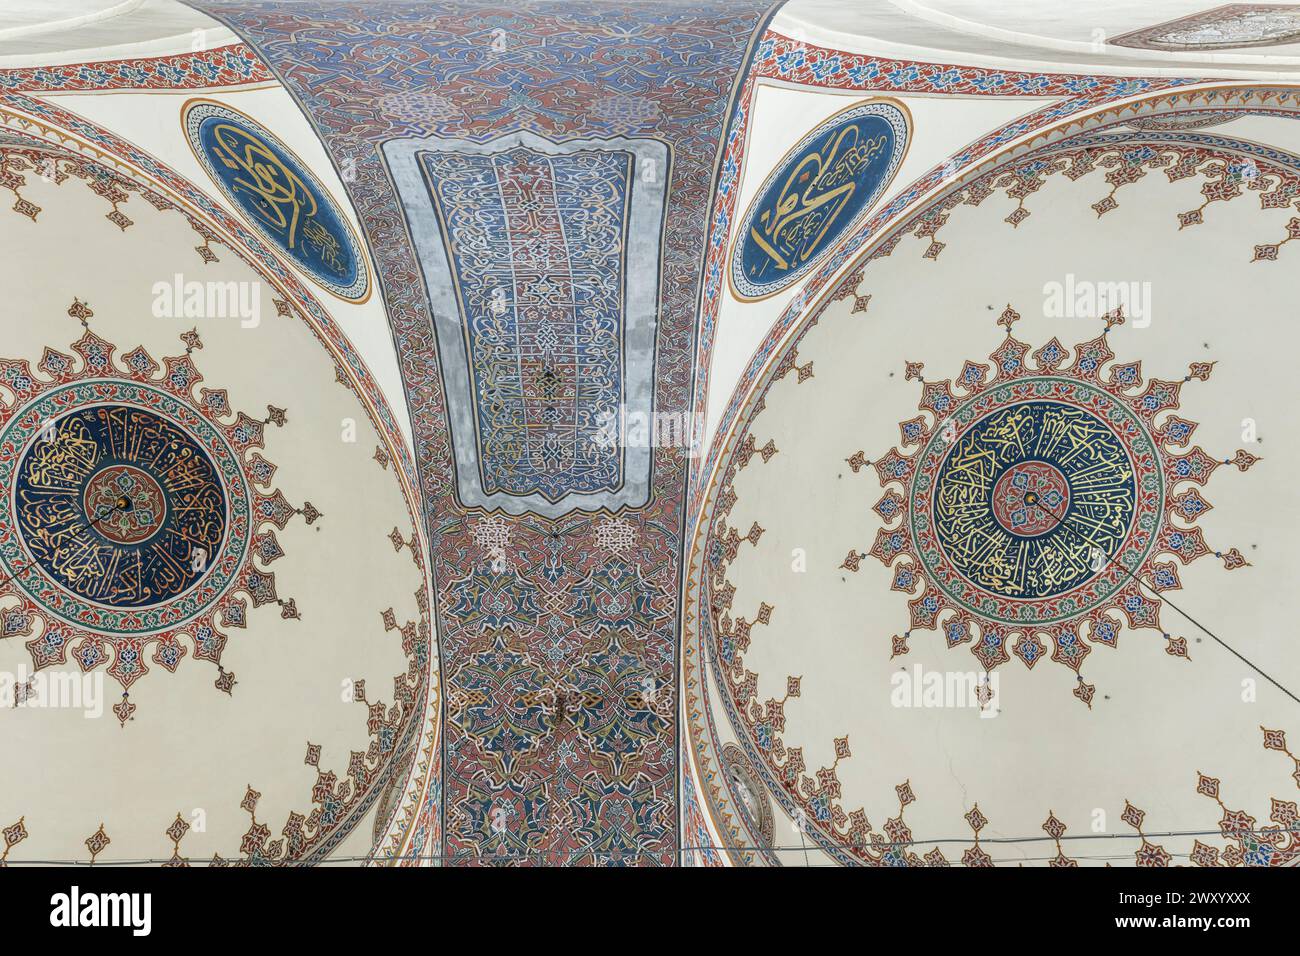 Interno della moschea Gedik Ahmet Pasha Imaret, Afyonkarahisar, provincia di Afyonkarahisar, Turchia Foto Stock